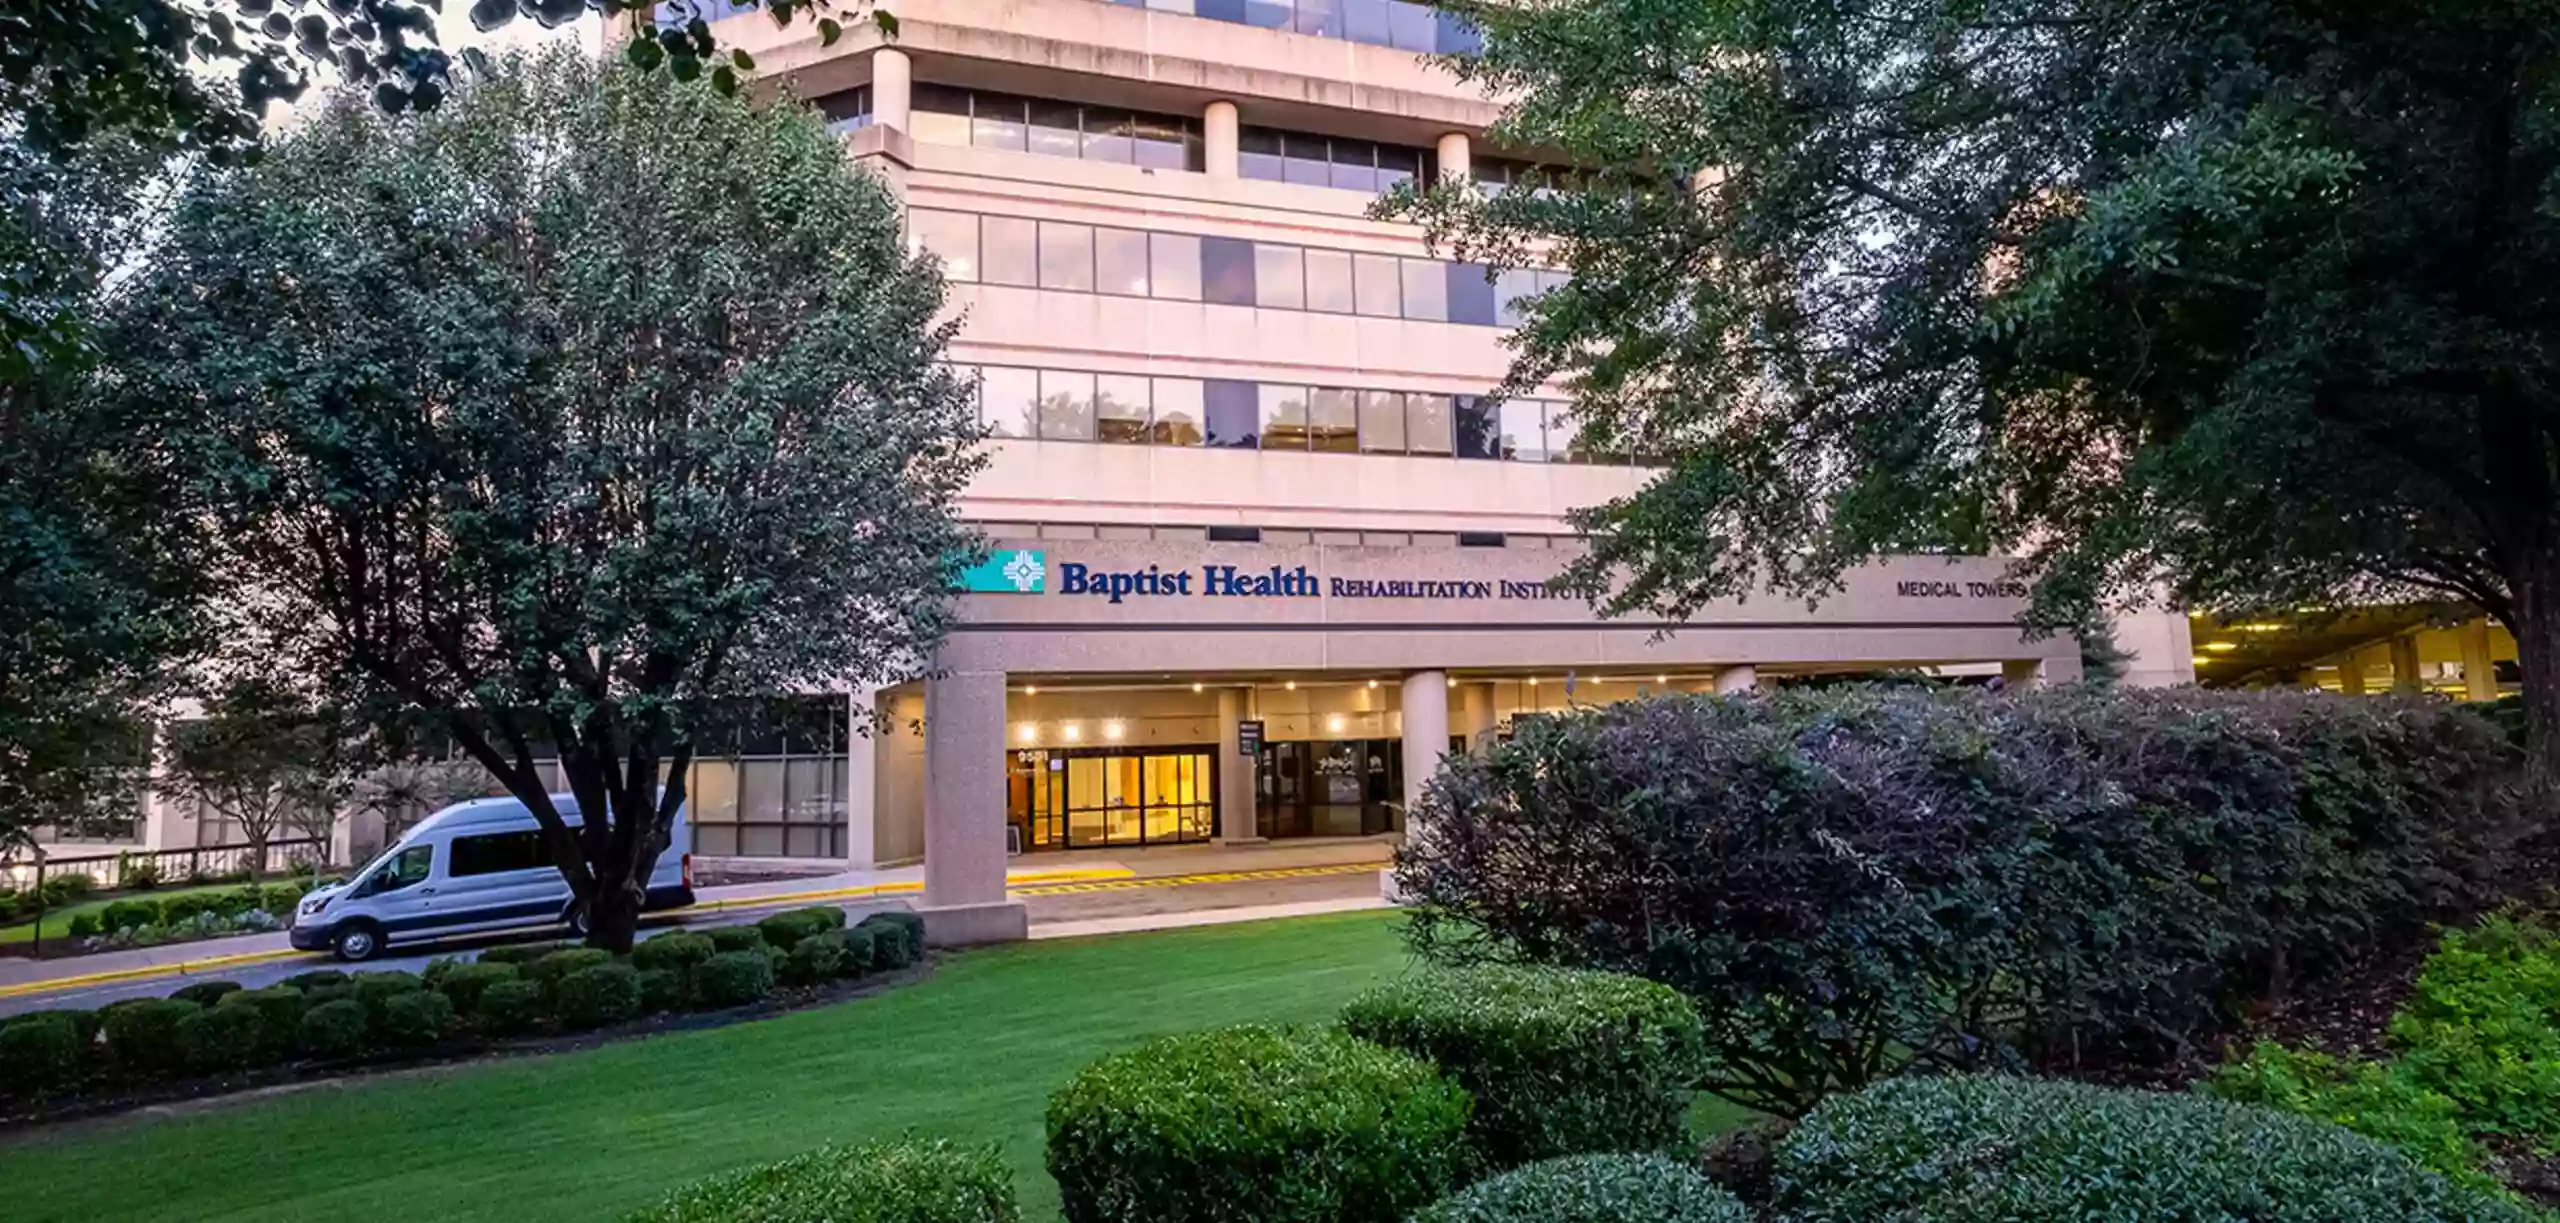 Baptist Health Rehabilitation Institute-Little Rock